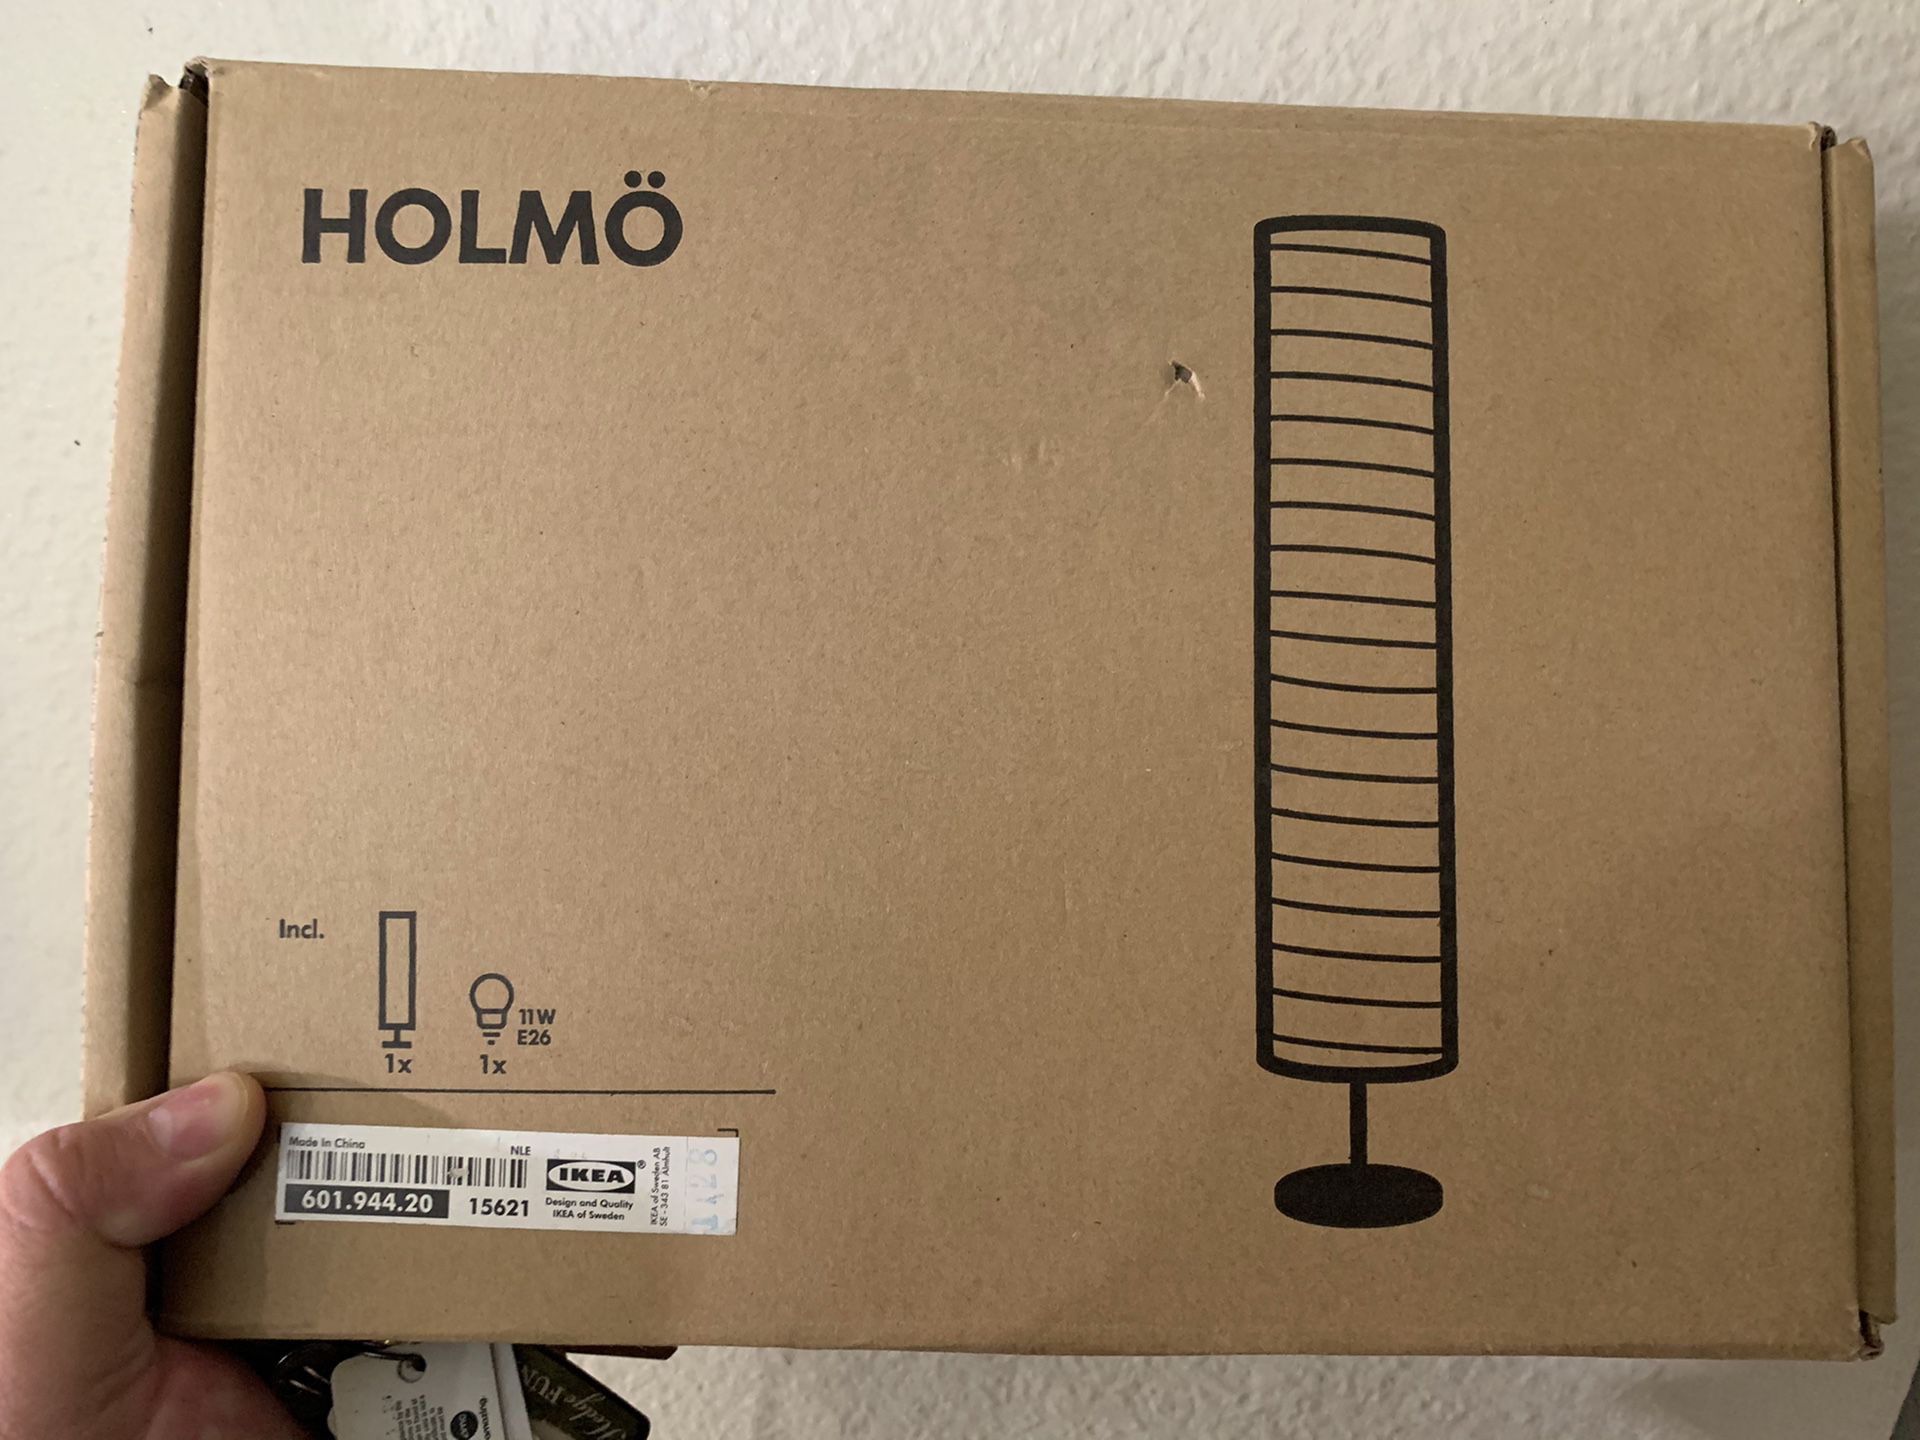 IKEA Holmo lamp